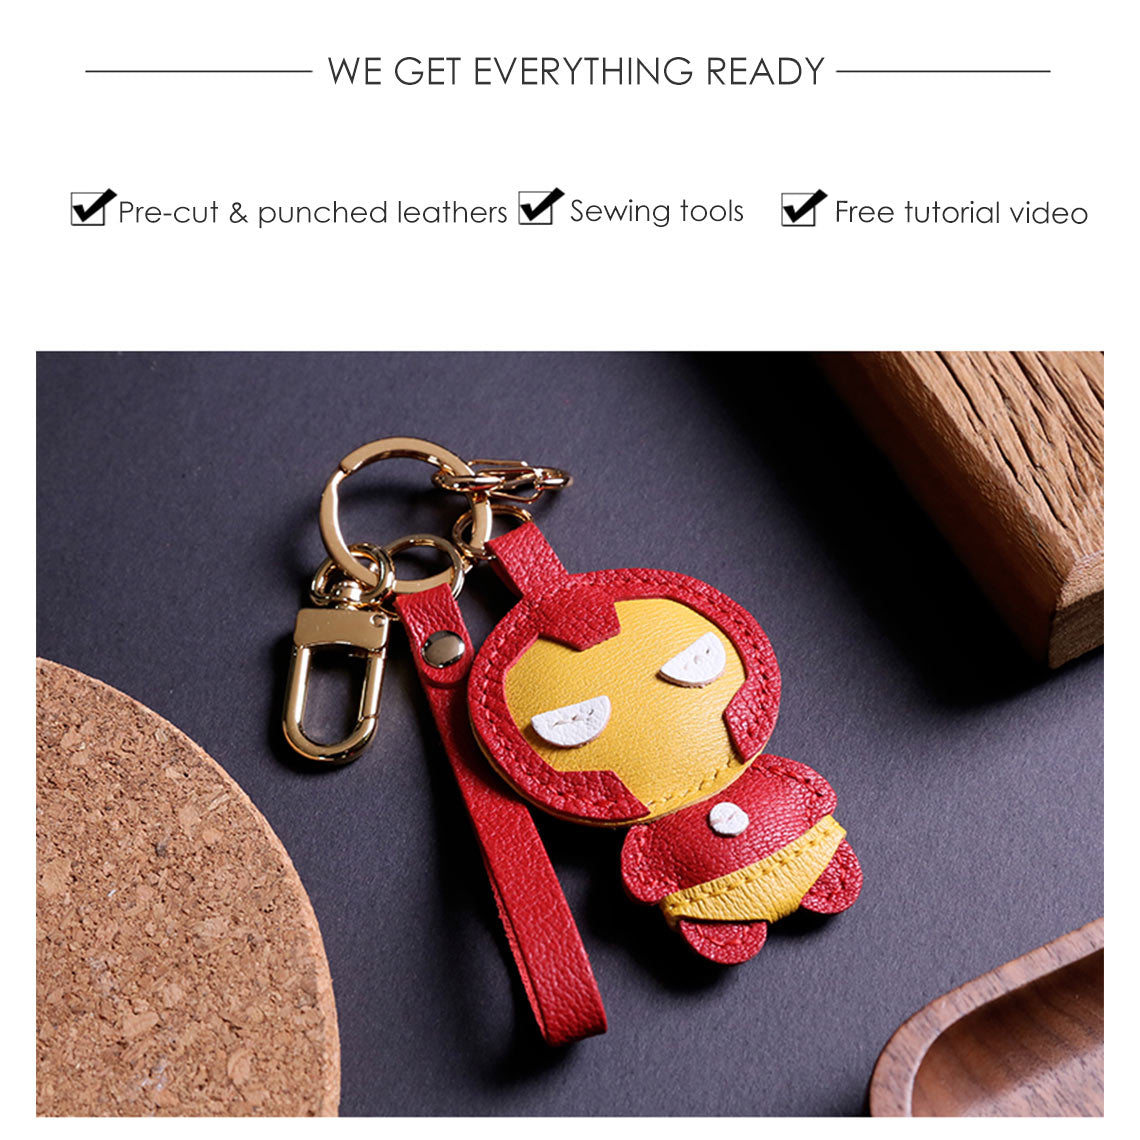 Cute marvel keychains making kit | Unique gift for men & marvel fans